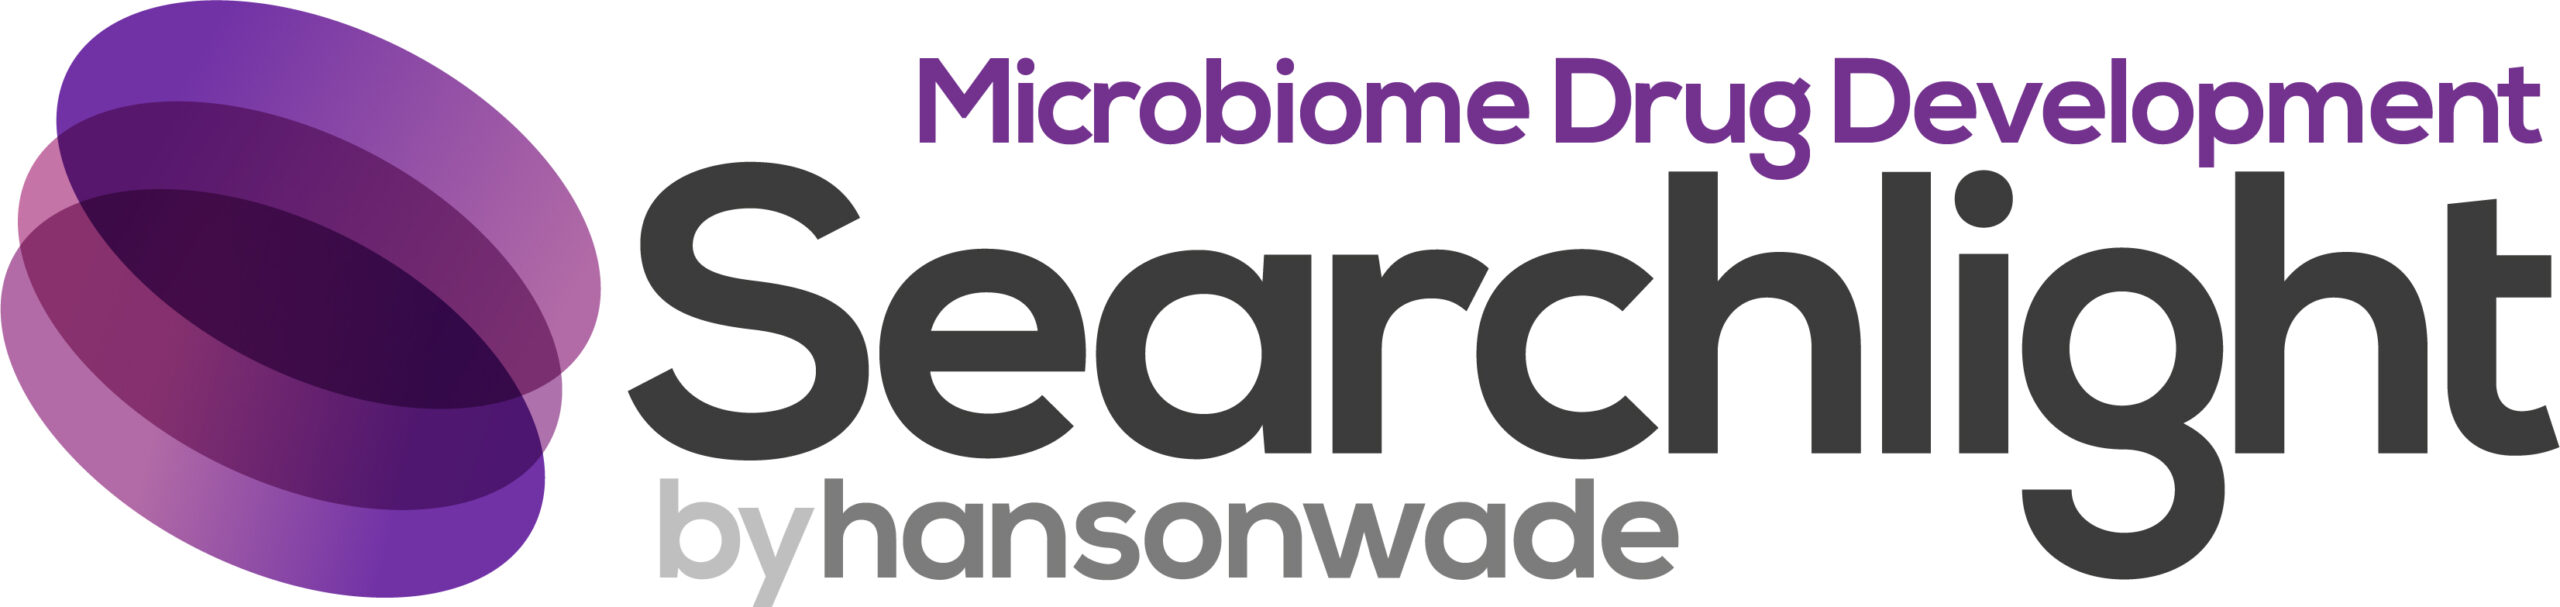 Searchlight_Microbiome Drug Development